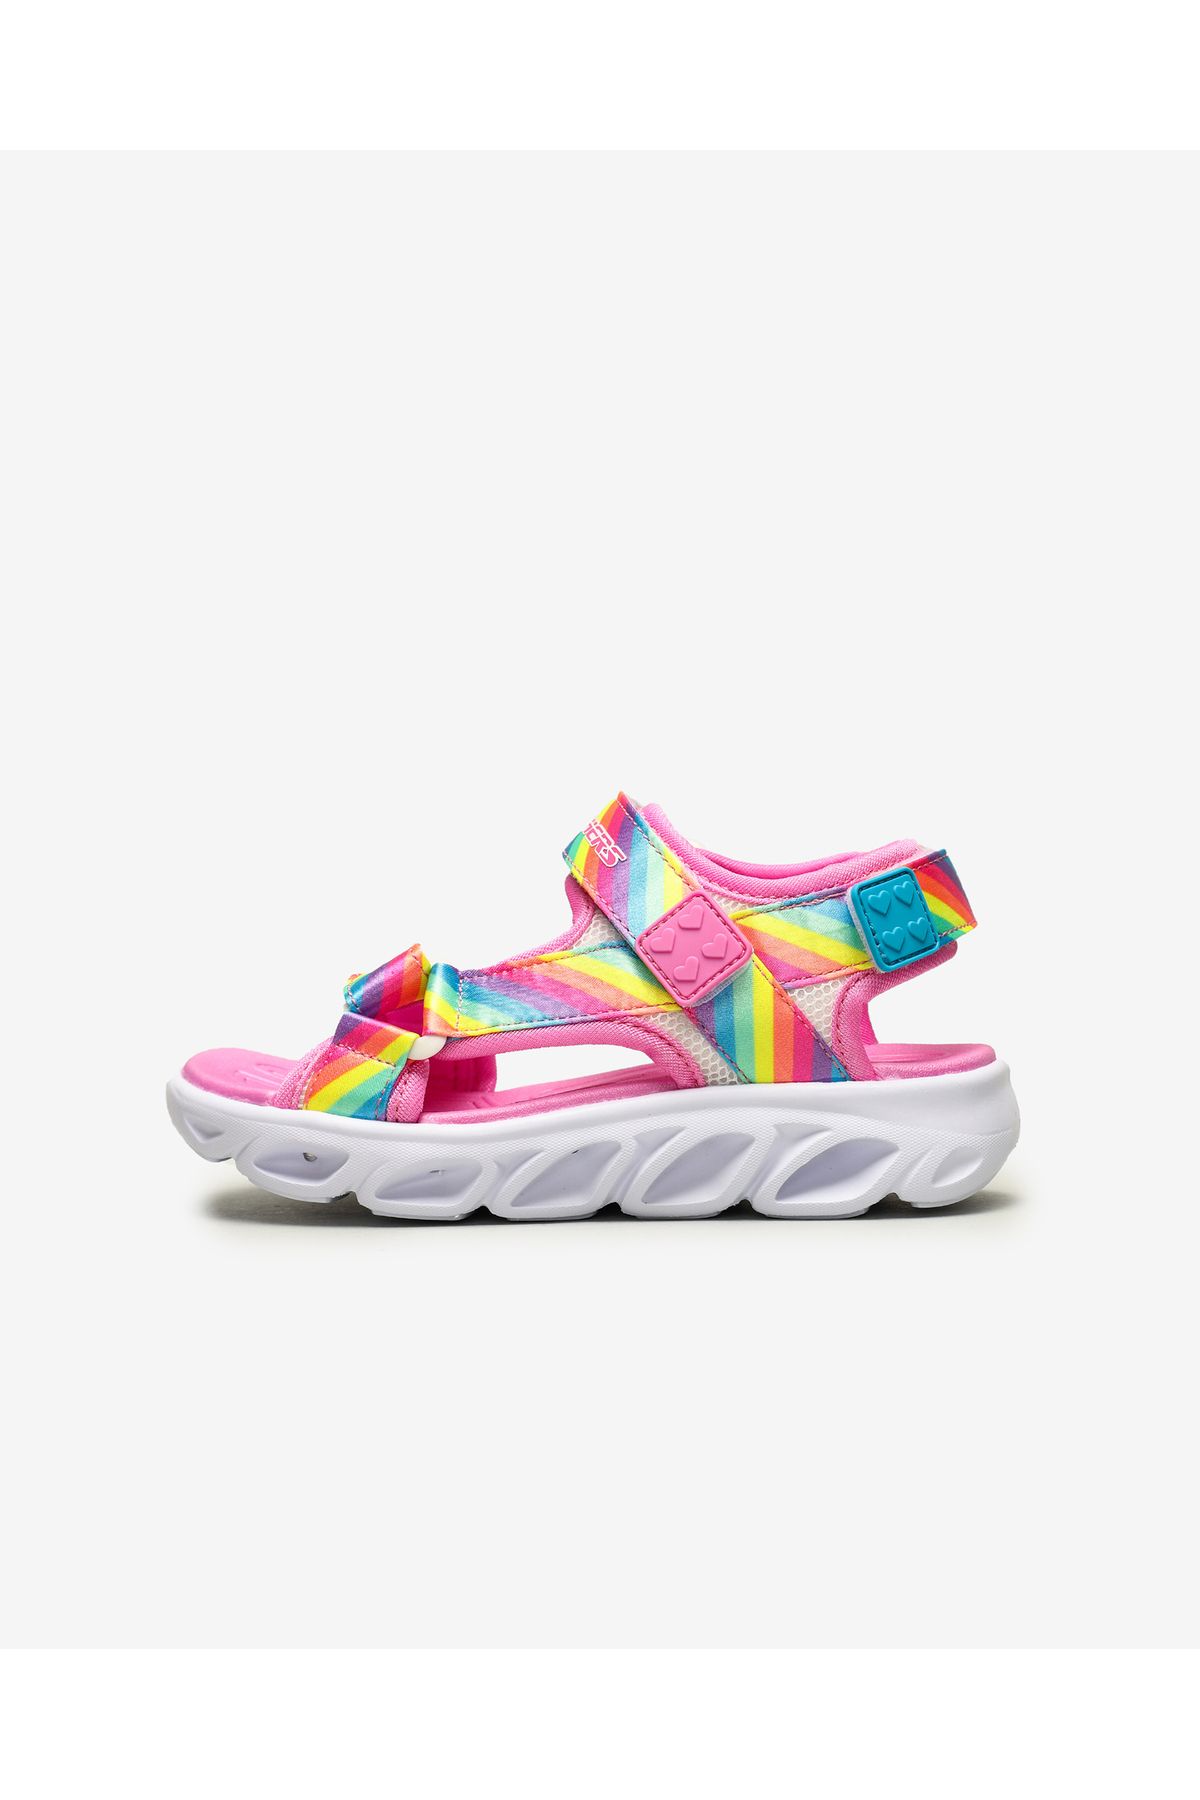 Skechers Hypno - Flash - Rainbow Lights Büyük Kız Çocuk Çok Renkli Işıklı Sandalet 20218l Mlt